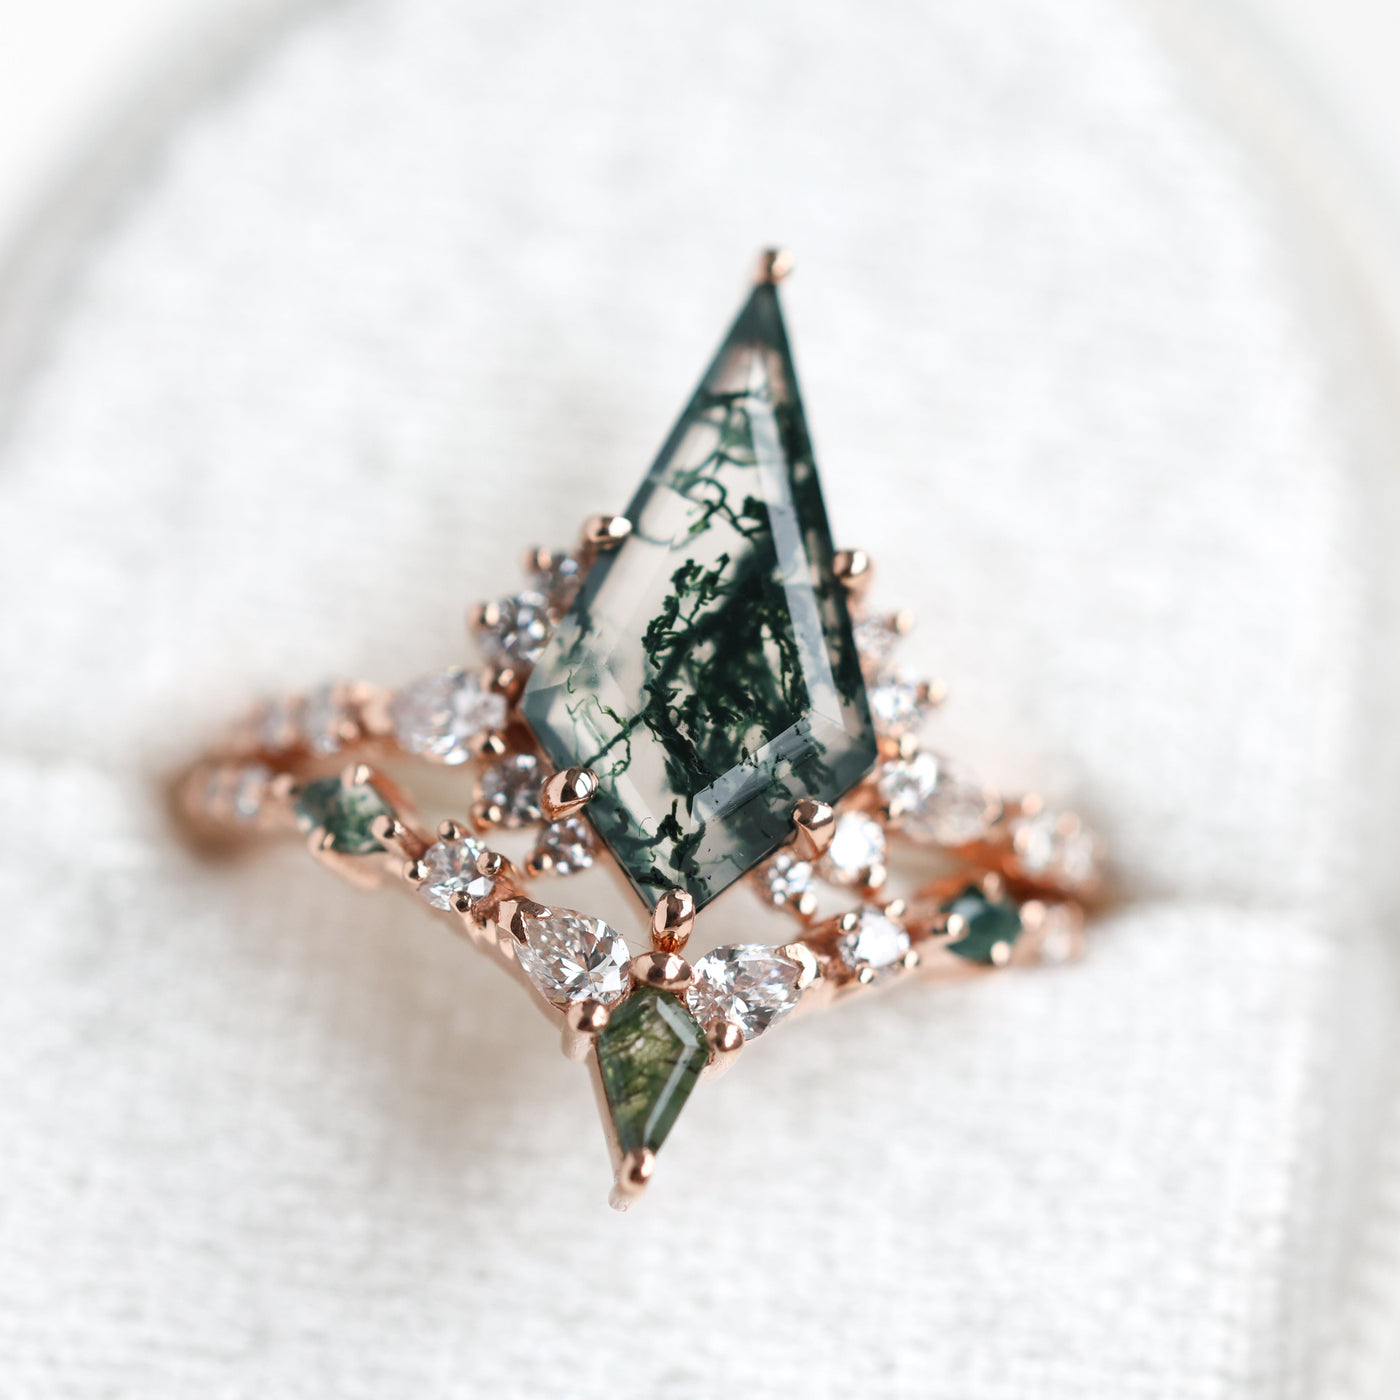 Abigail Kite Moss Agate and Diamond Ring Set